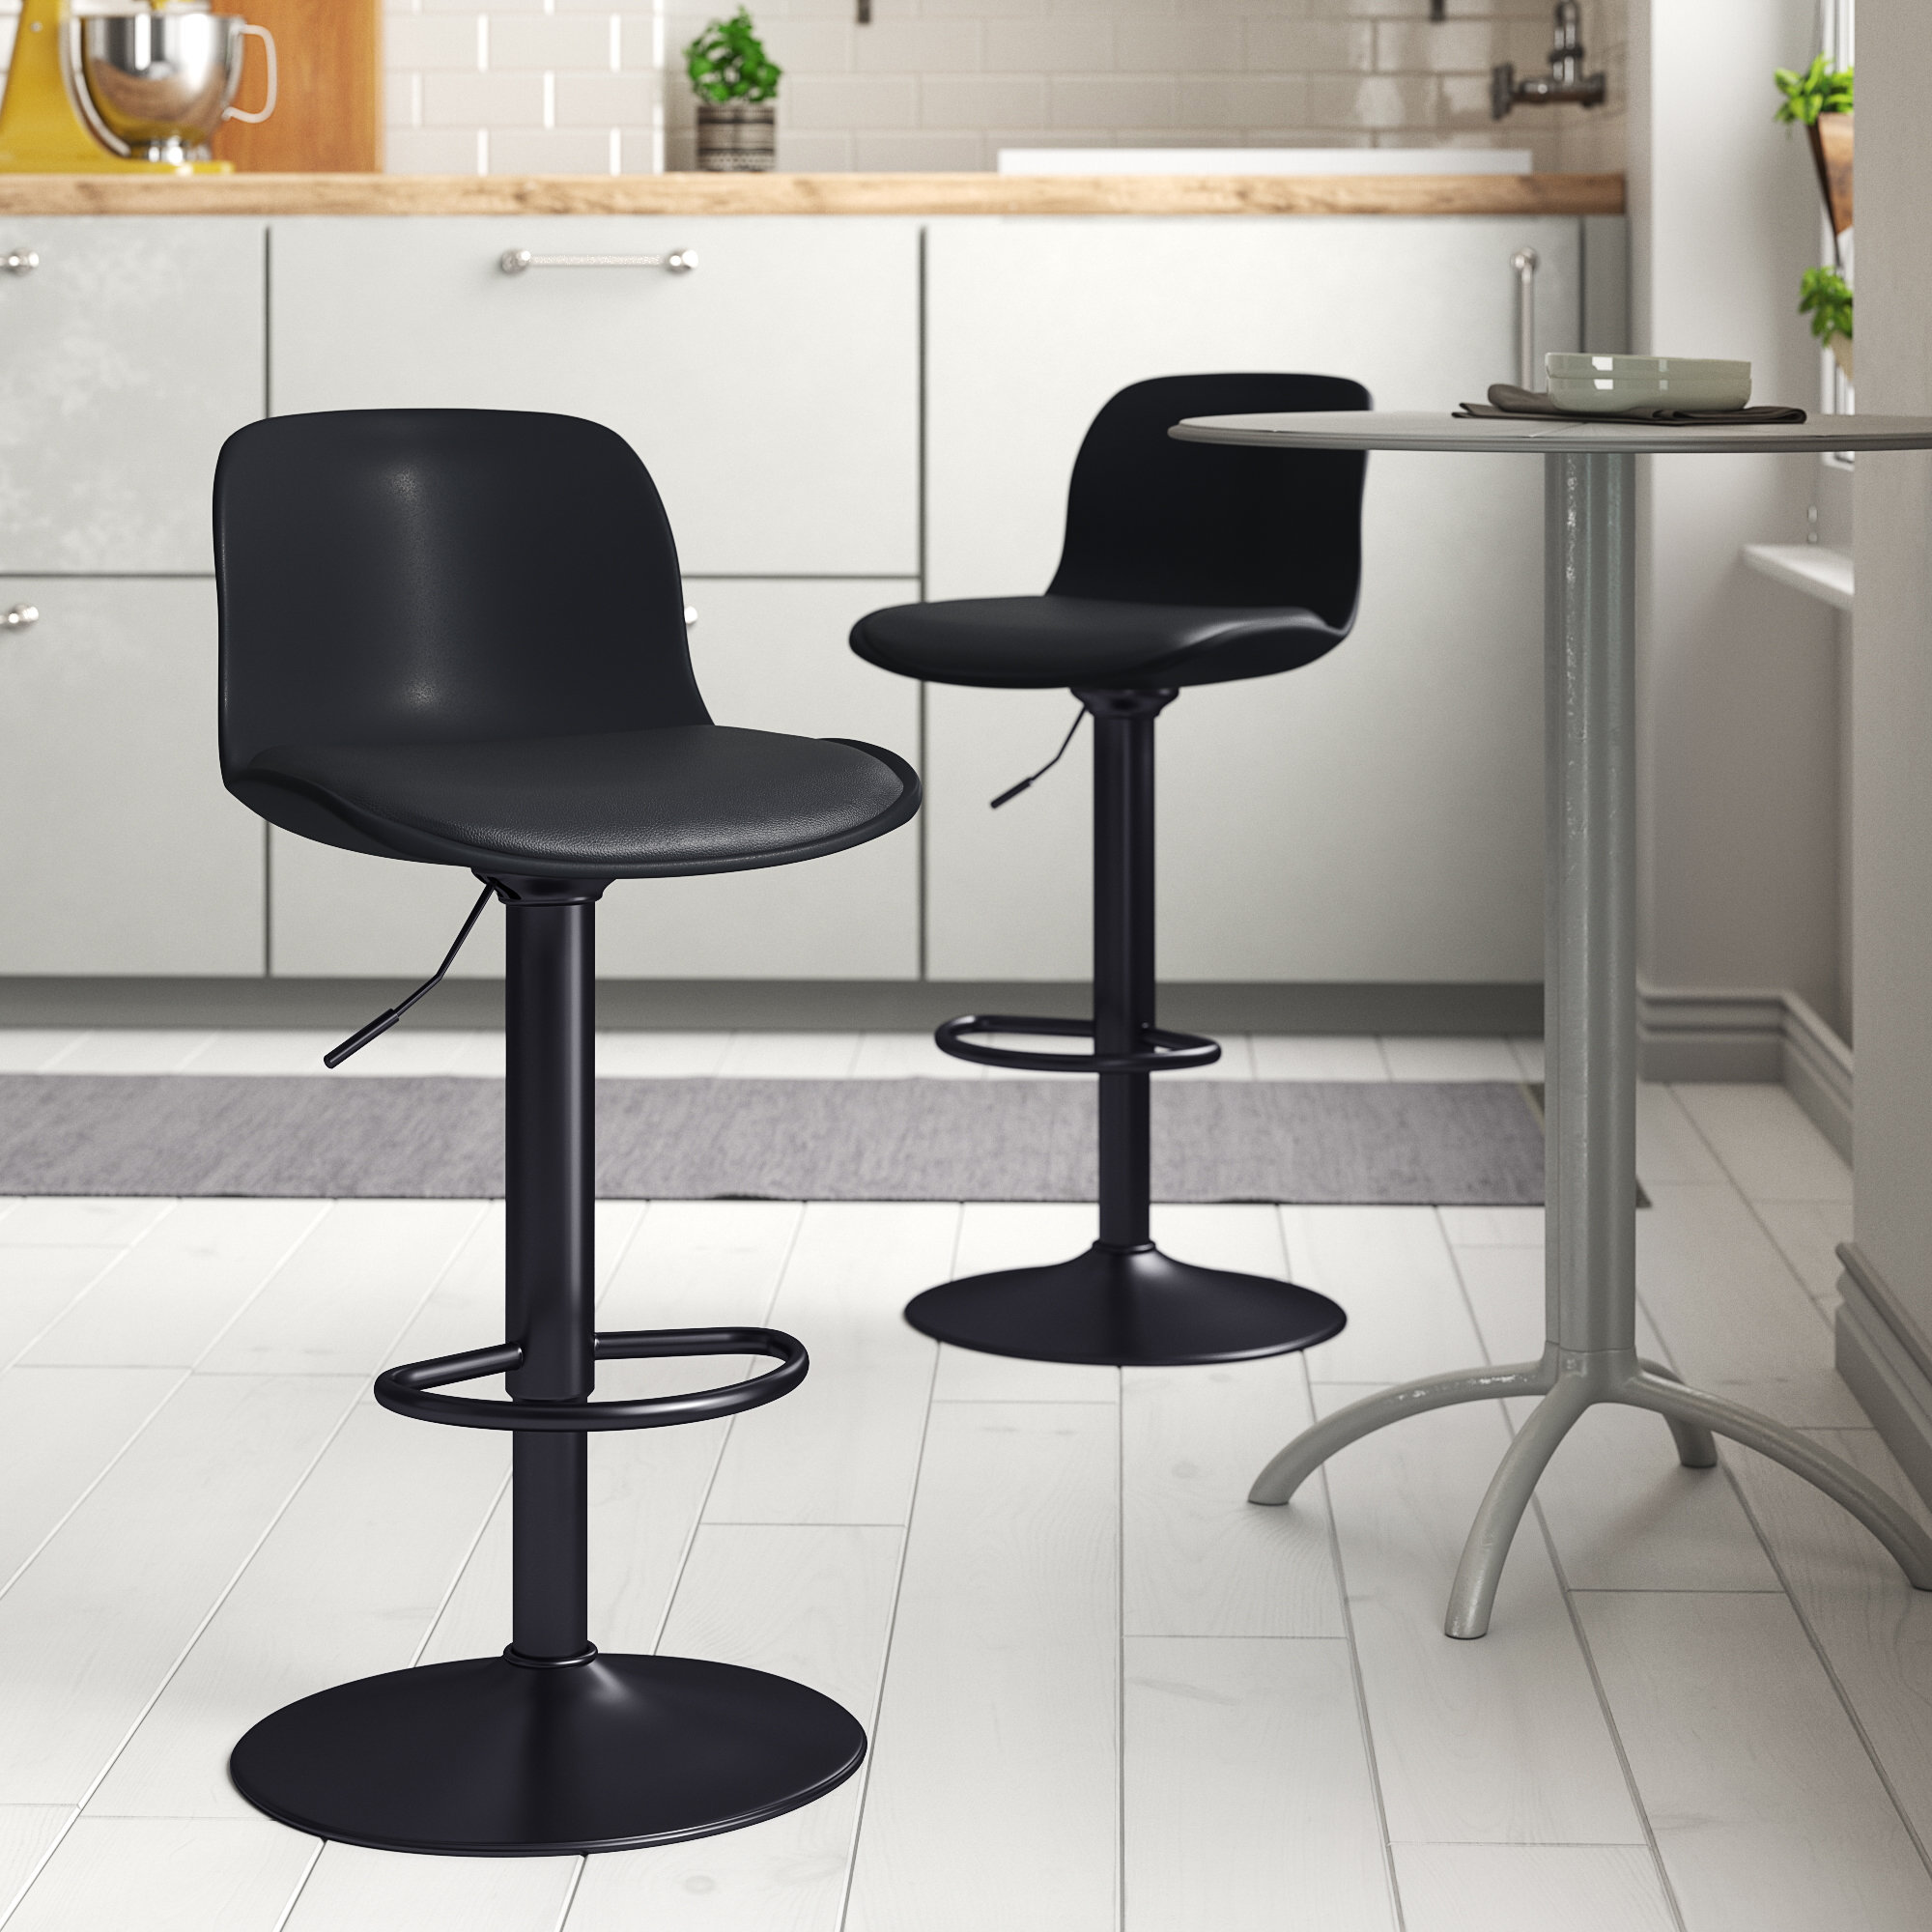 Set of 4 Bar Stools Swivel Adjustable Counter Bar Chair Dining Kitchen Seat USA 